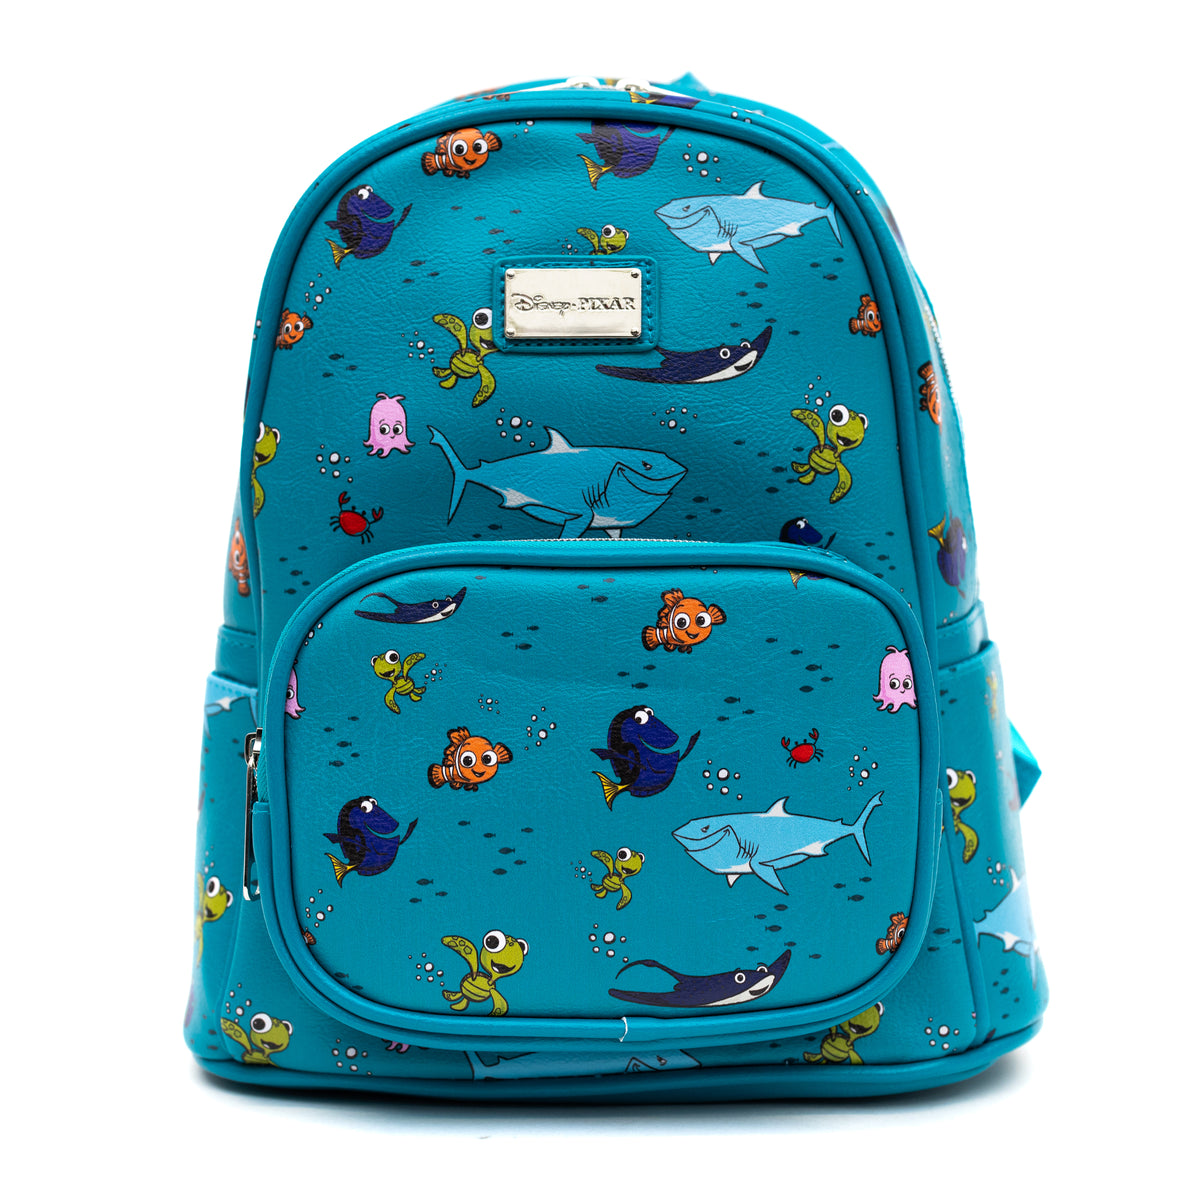 Storybook Disney Pixar Finding Nemo Mini Backpack